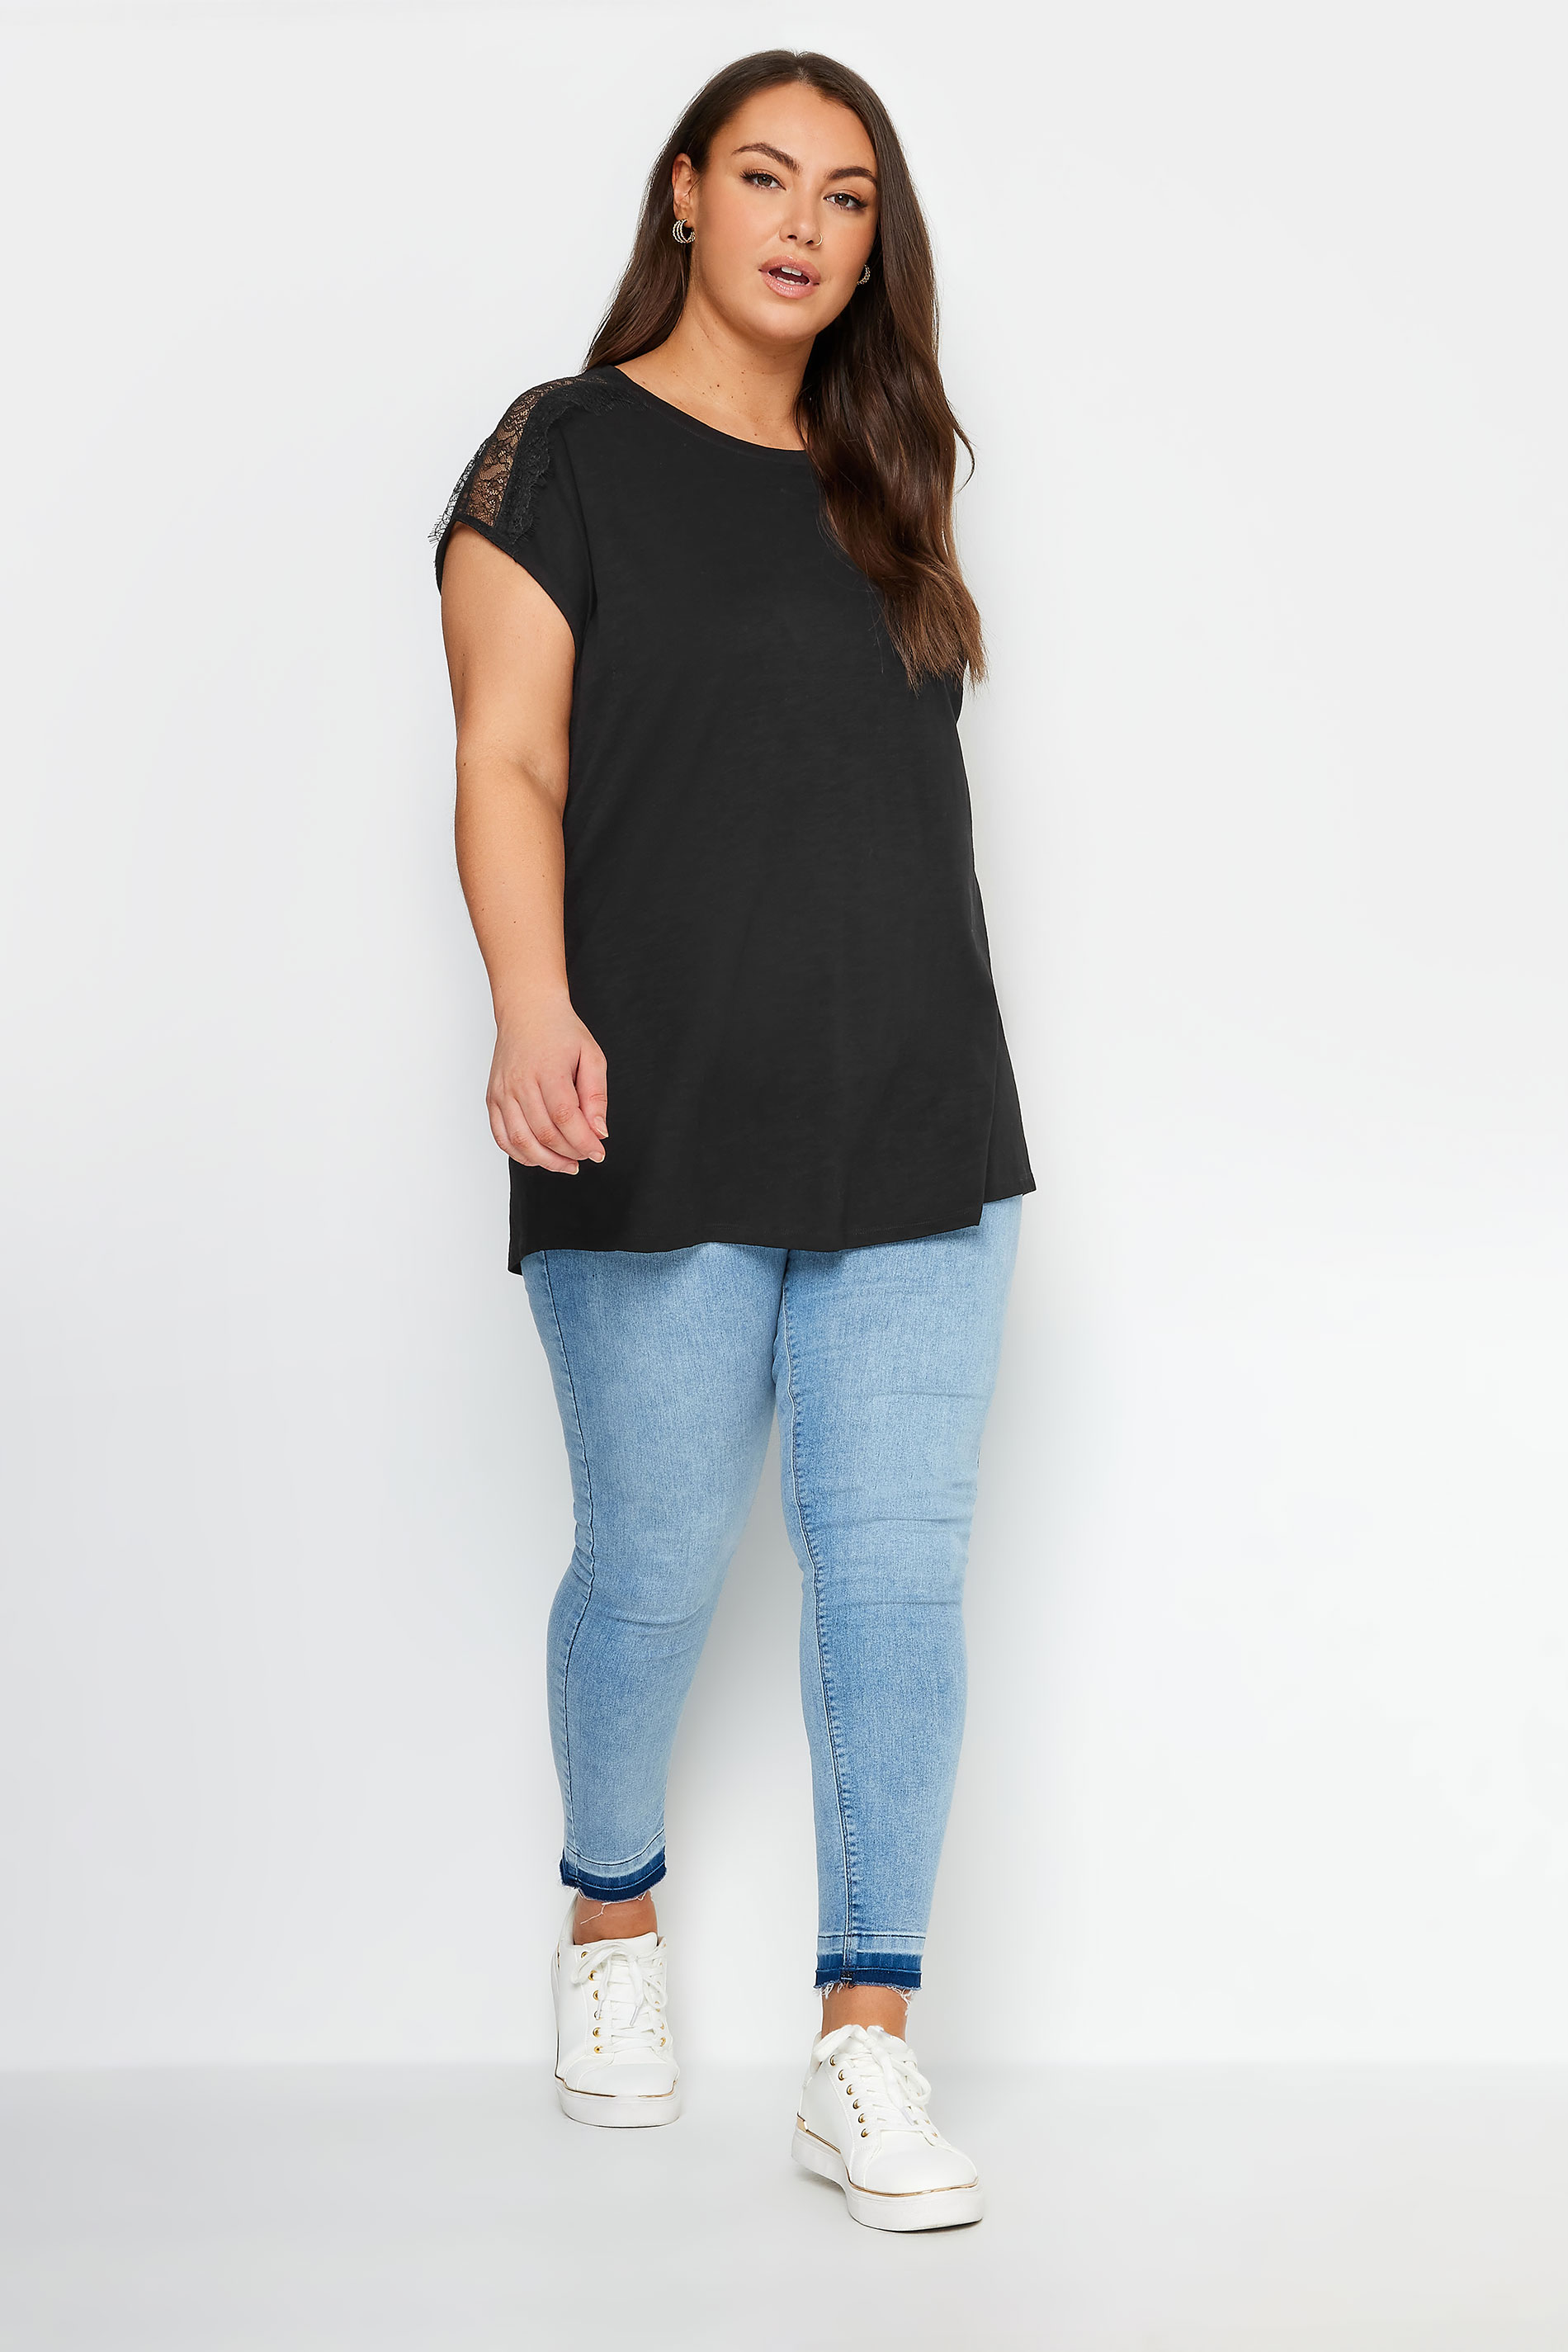 YOURS Plus Size Black Lace Shoulder T-Shirt | Yours Clothing 2